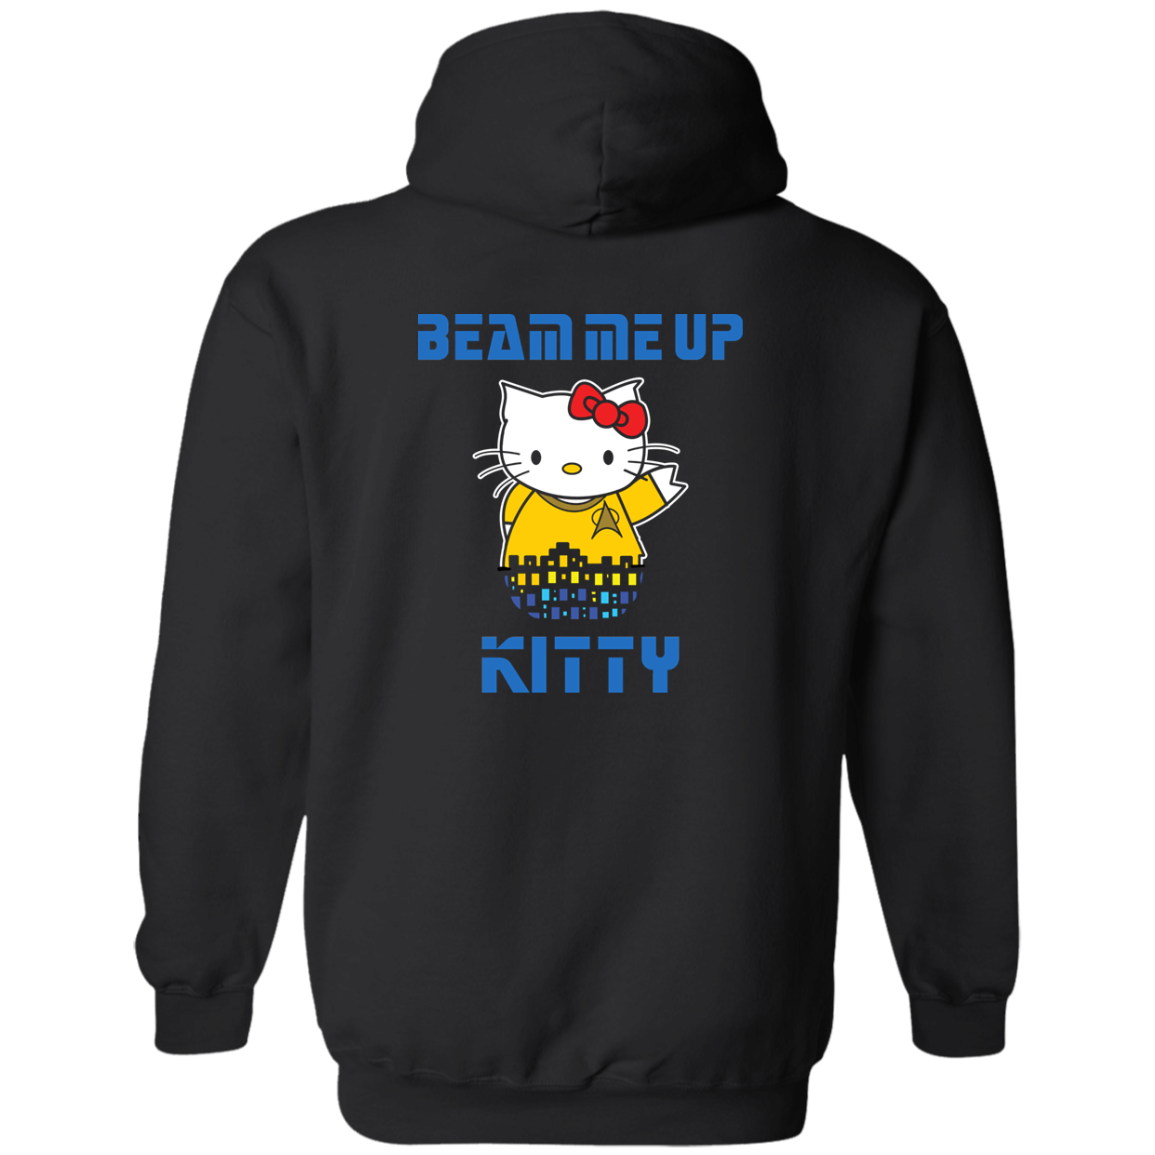 ArtichokeUSA Custom Design. Beam Me Up Kitty. Fan Art / Parody. Zip Up Hooded Sweatshirt